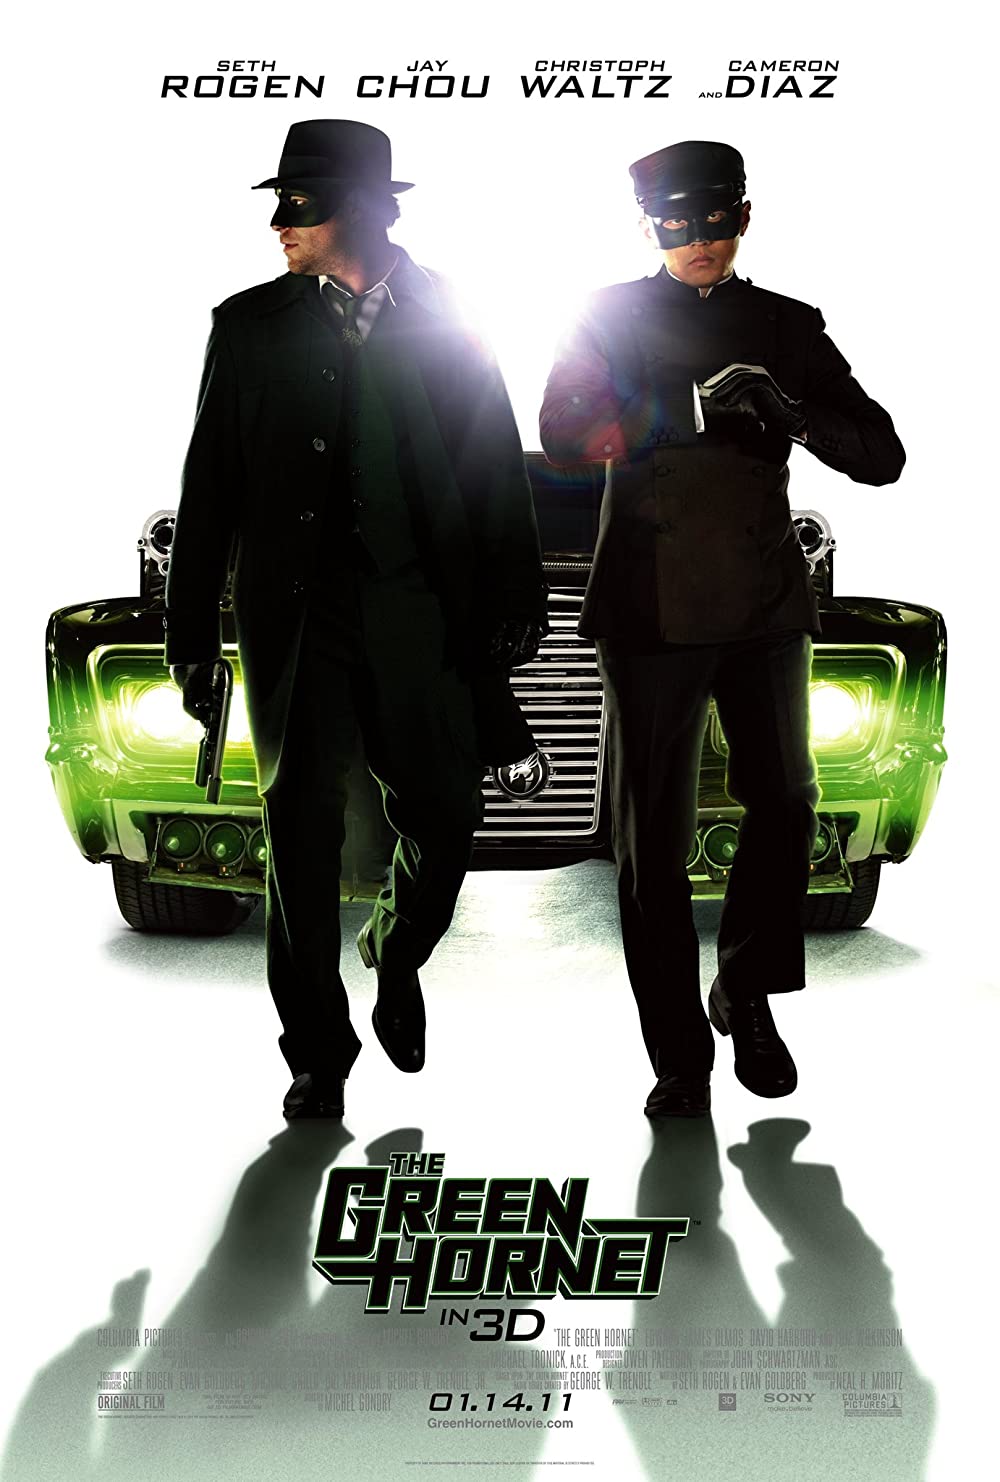 The Green Hornet หน้ากากแตนอาละวาด (2012)